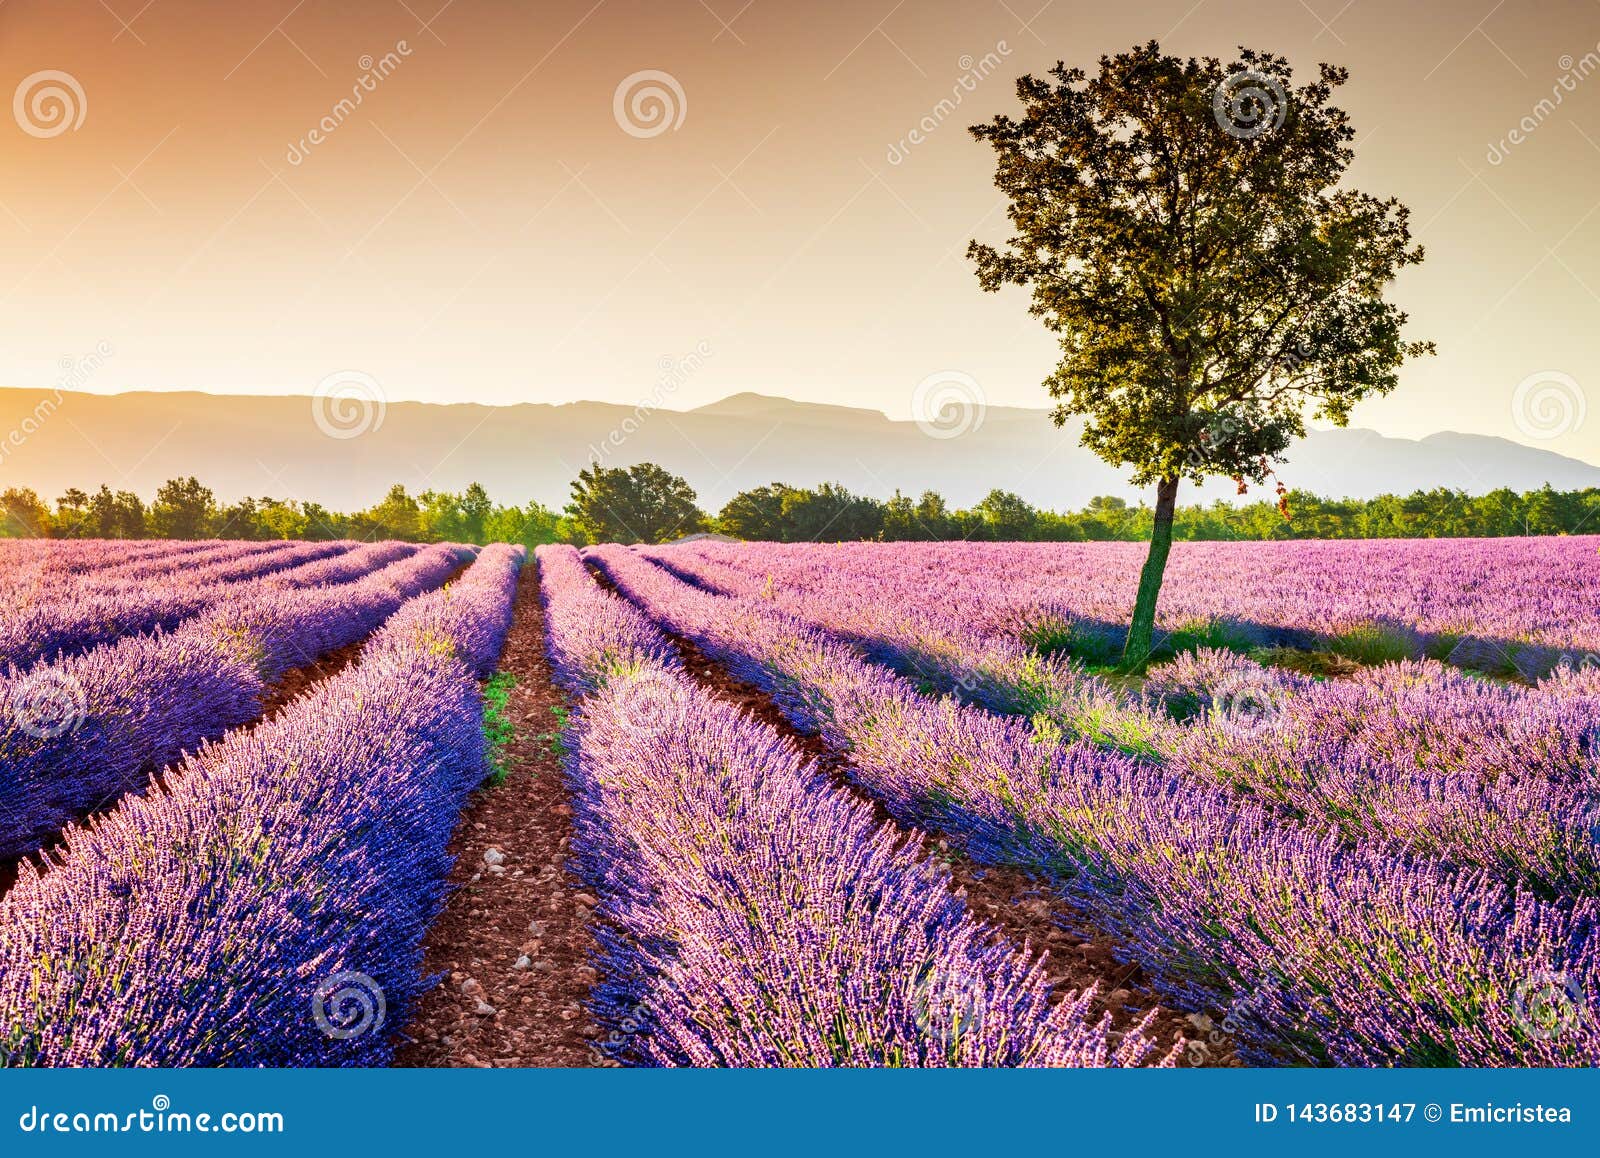 valensole lavender in provence, france